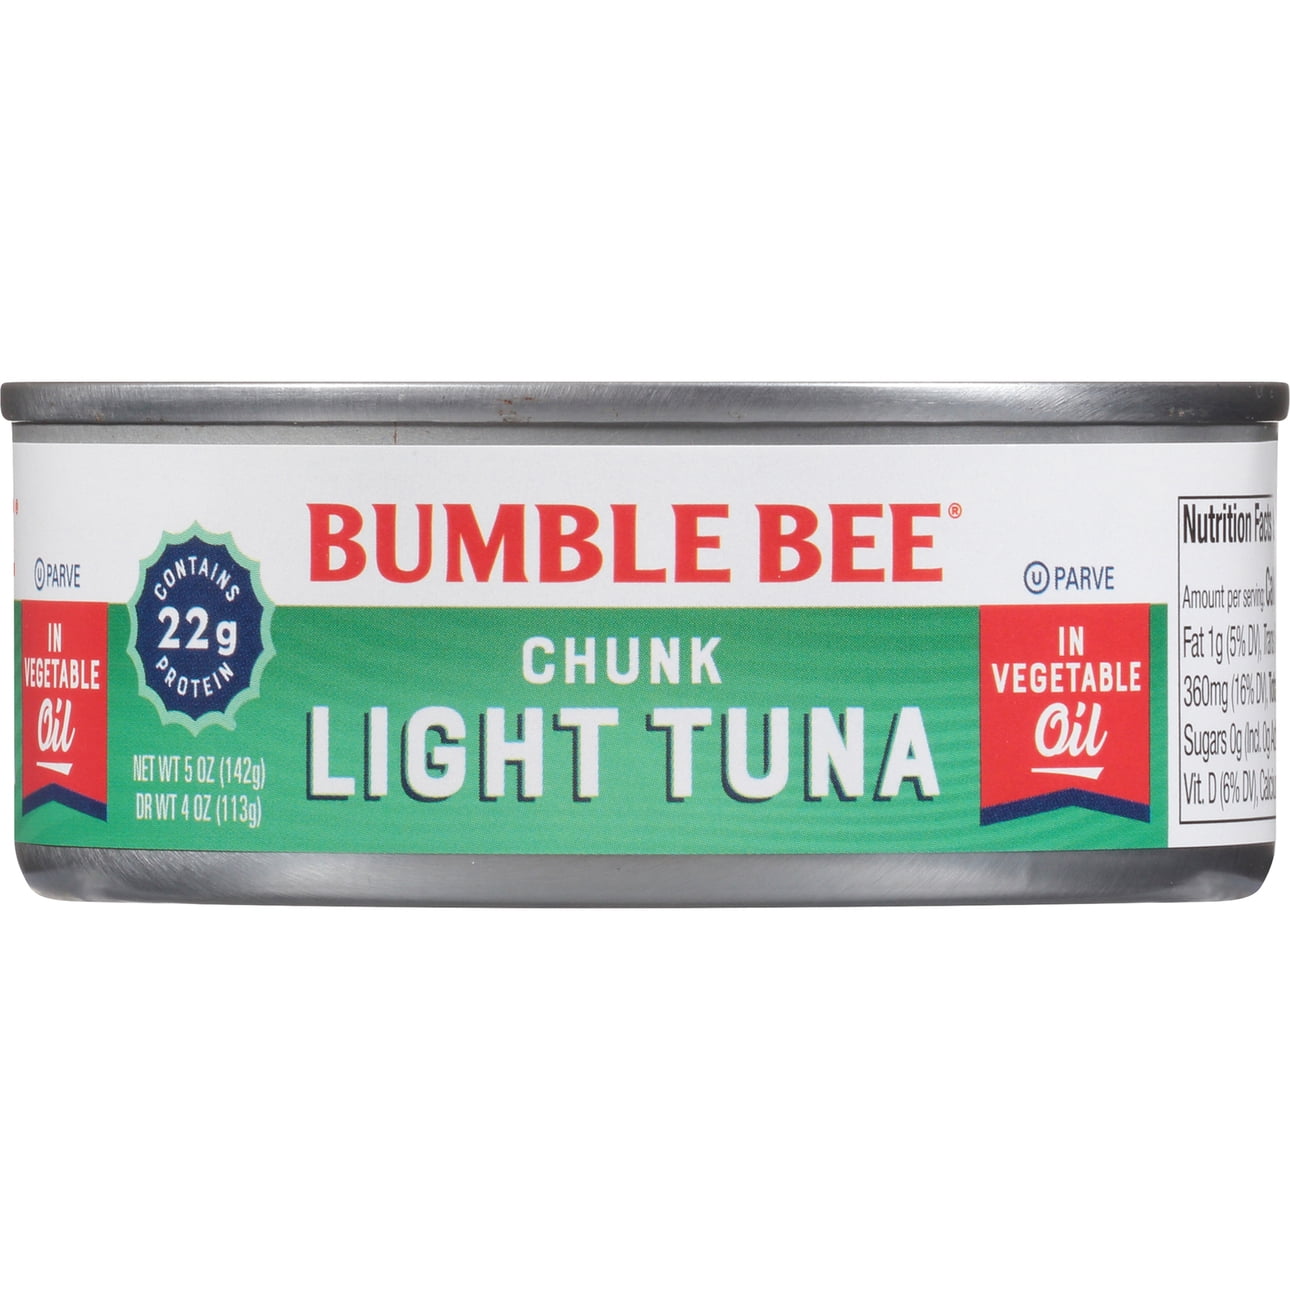 Bumble Bee Chunk Light Tuna in Vegetable Oil, 5 oz can